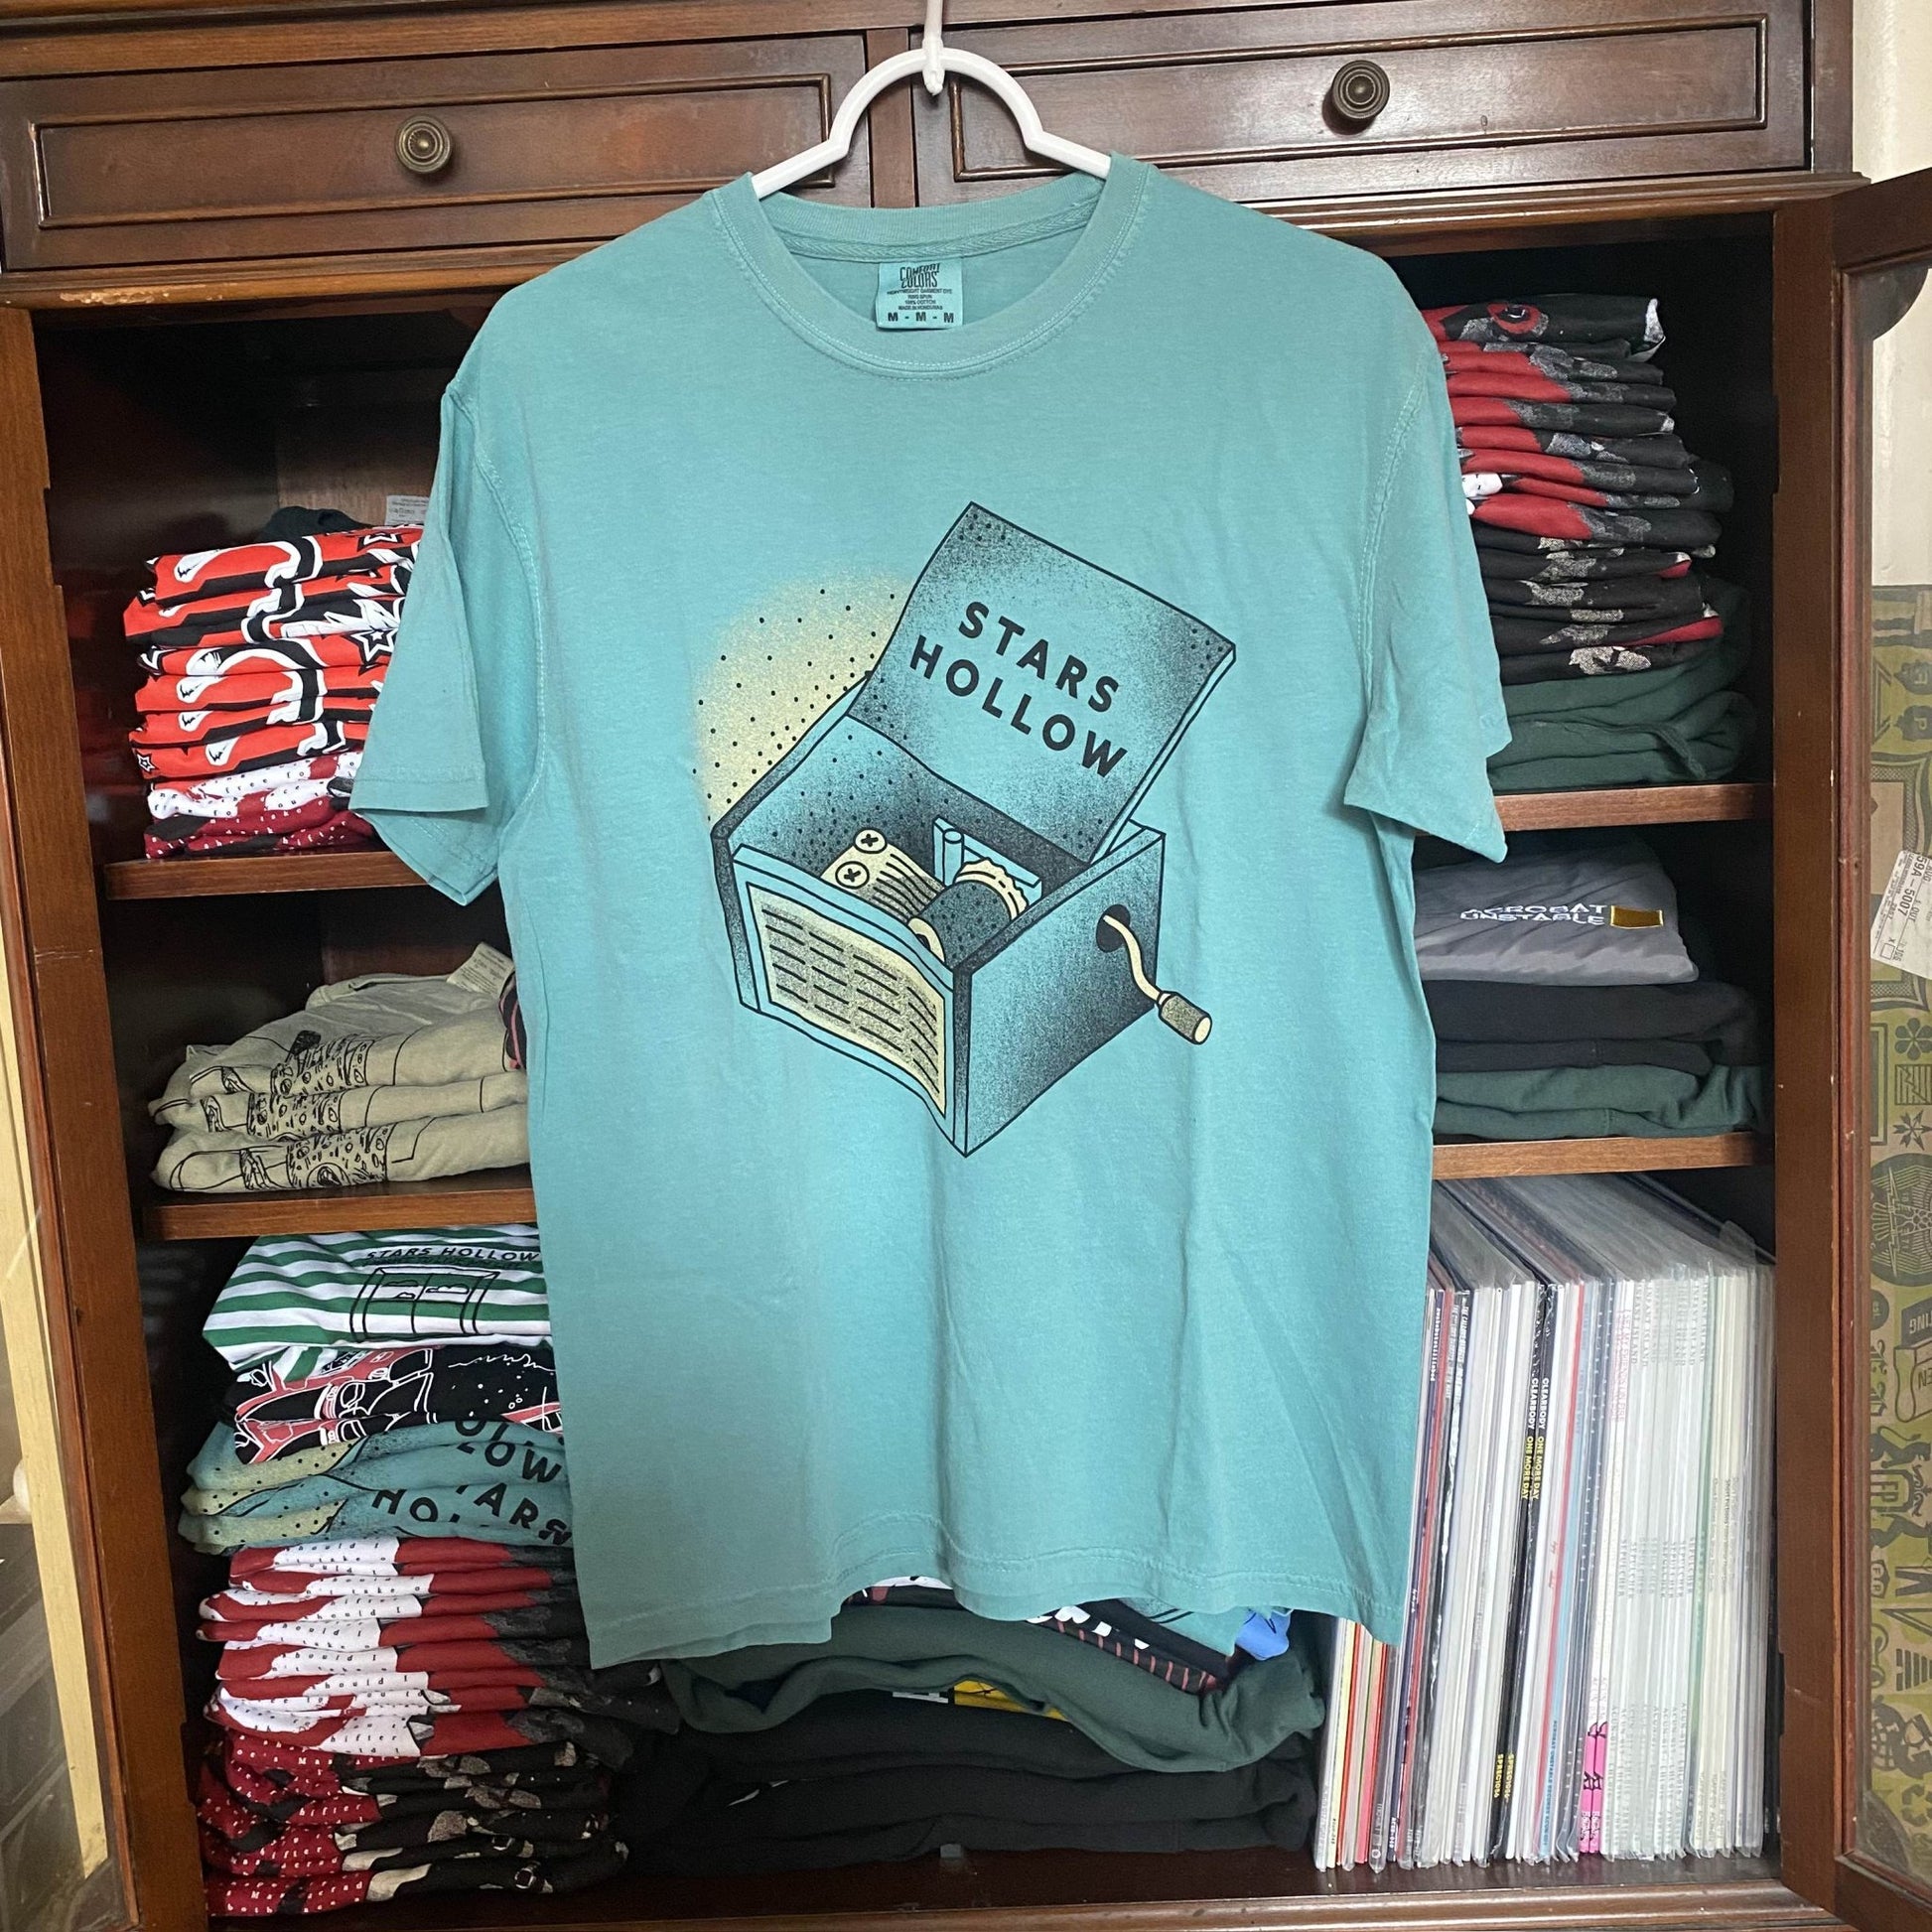 Stars Hollow - "Music Box" shirt - Acrobat Unstable Records